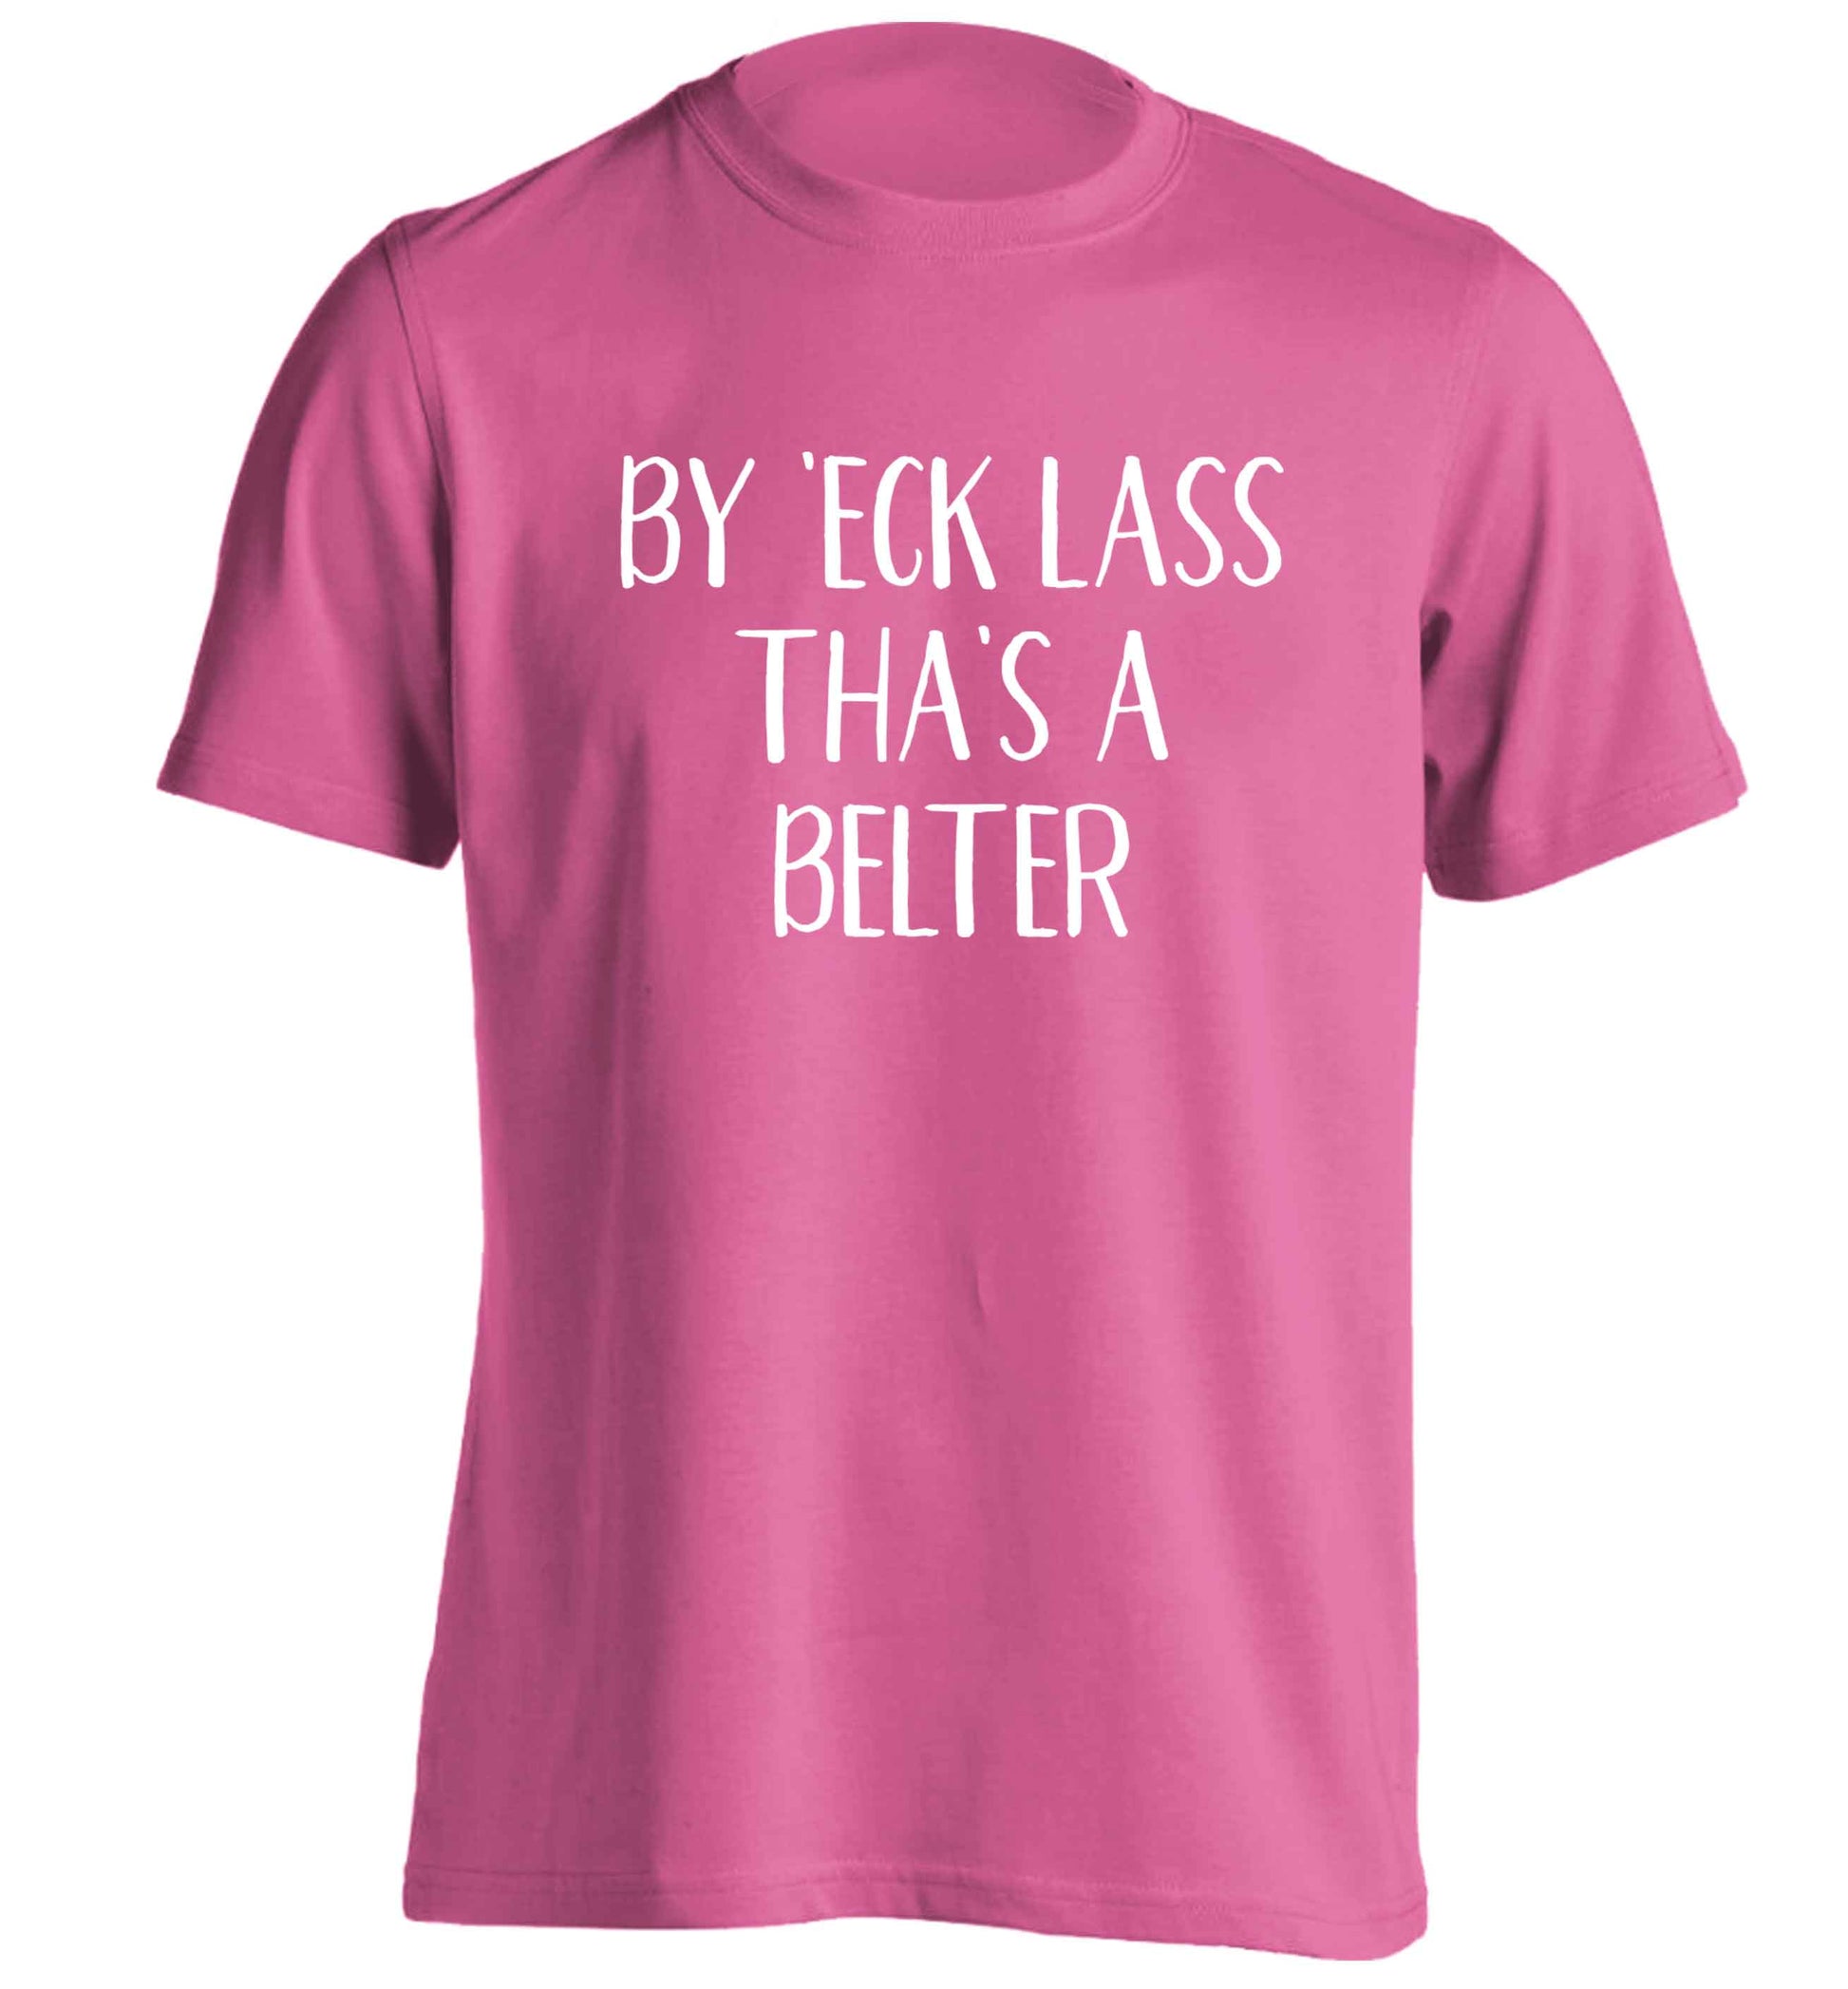 Be 'eck lass tha's a belter adults unisex pink Tshirt 2XL